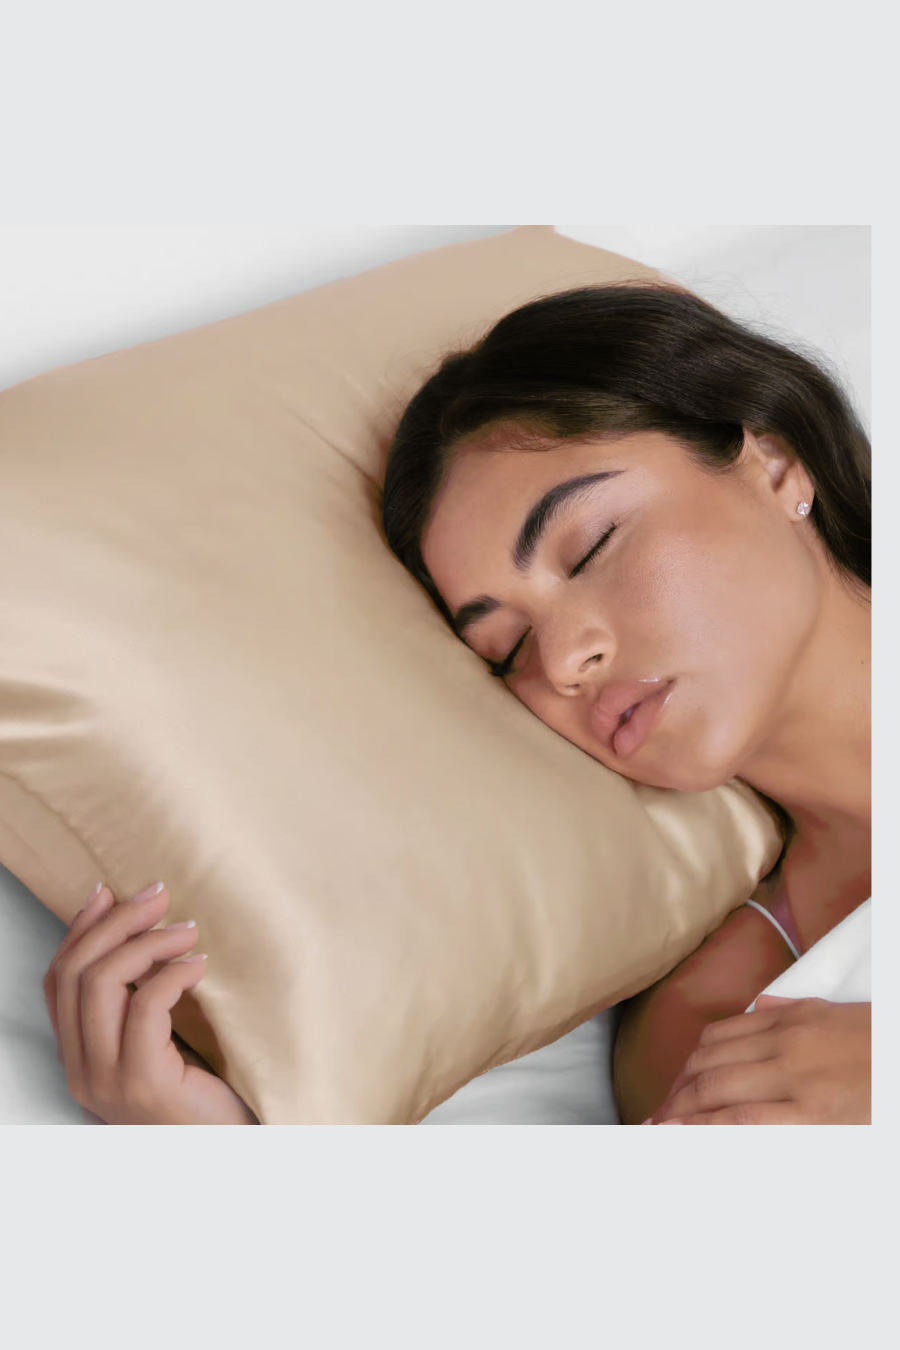 Standard Satin Pillowcase